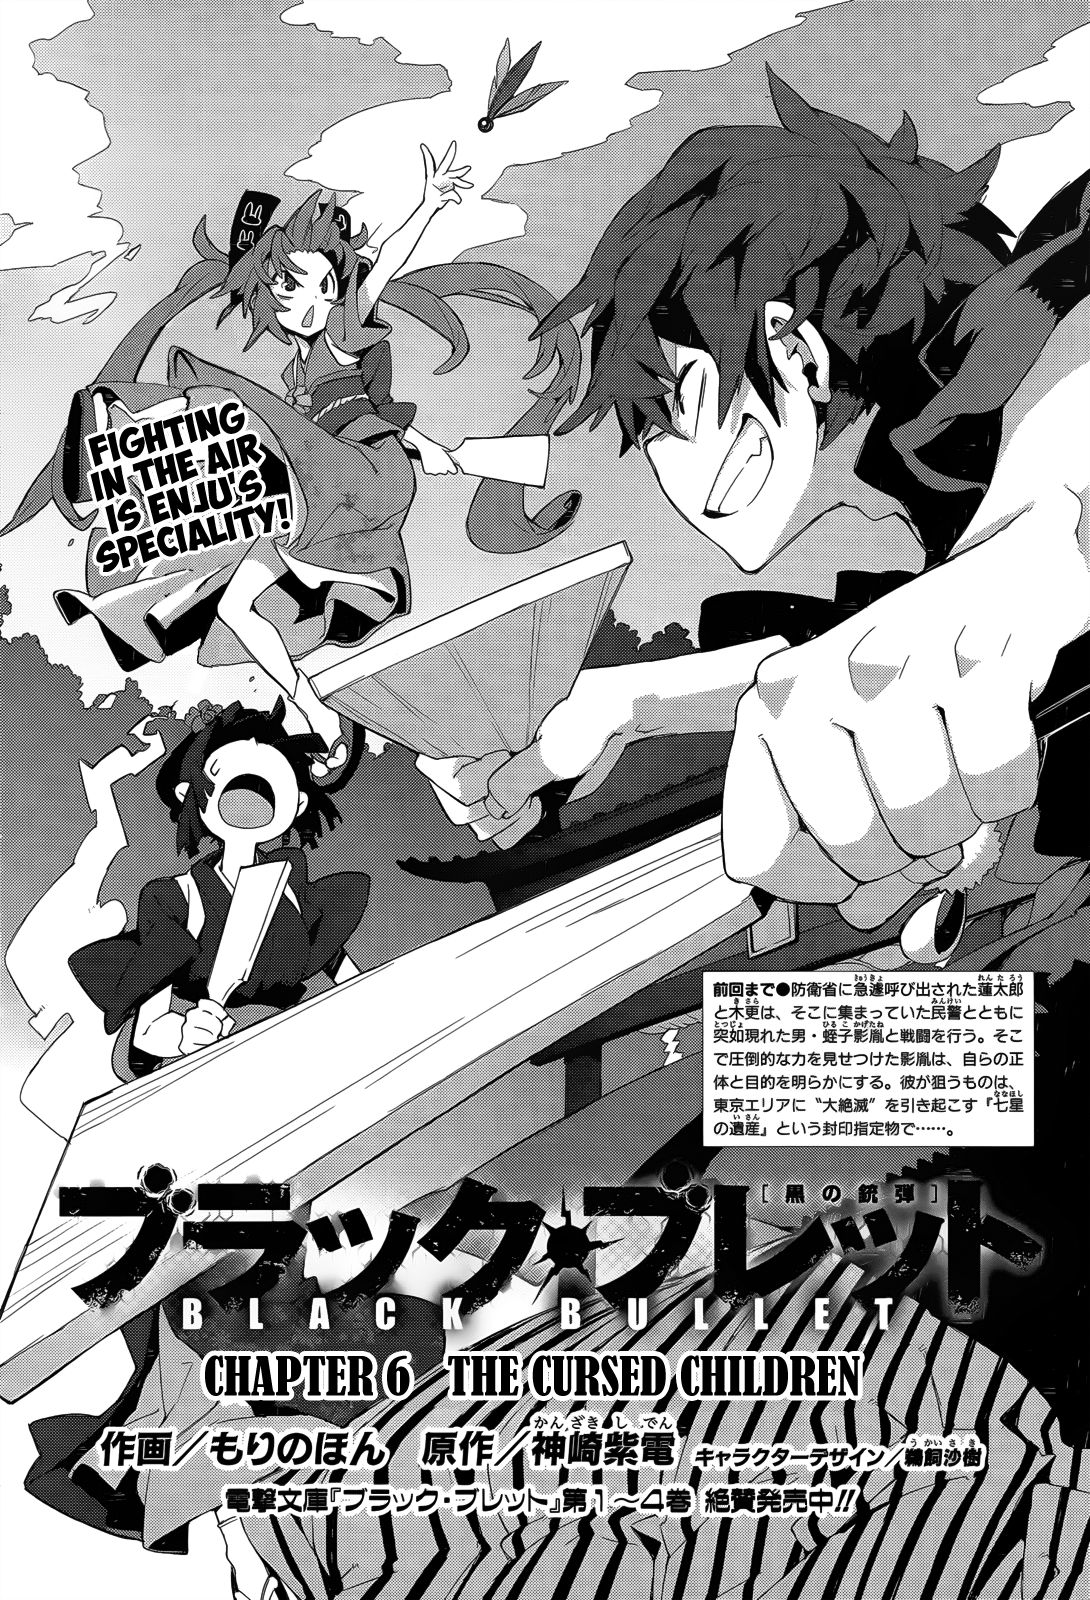 Black Bullet Manga Volume 1 manga